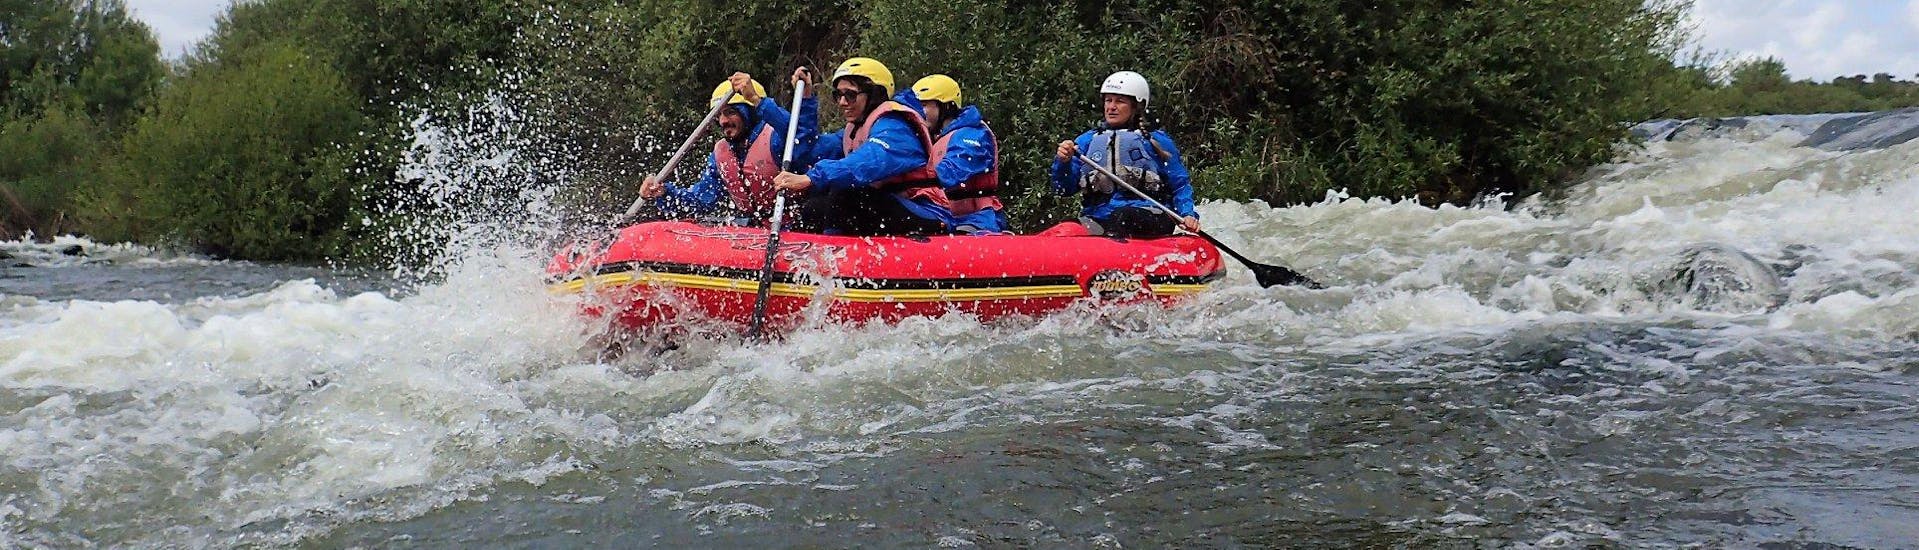 Rafting "Classic" - Guadiana River.